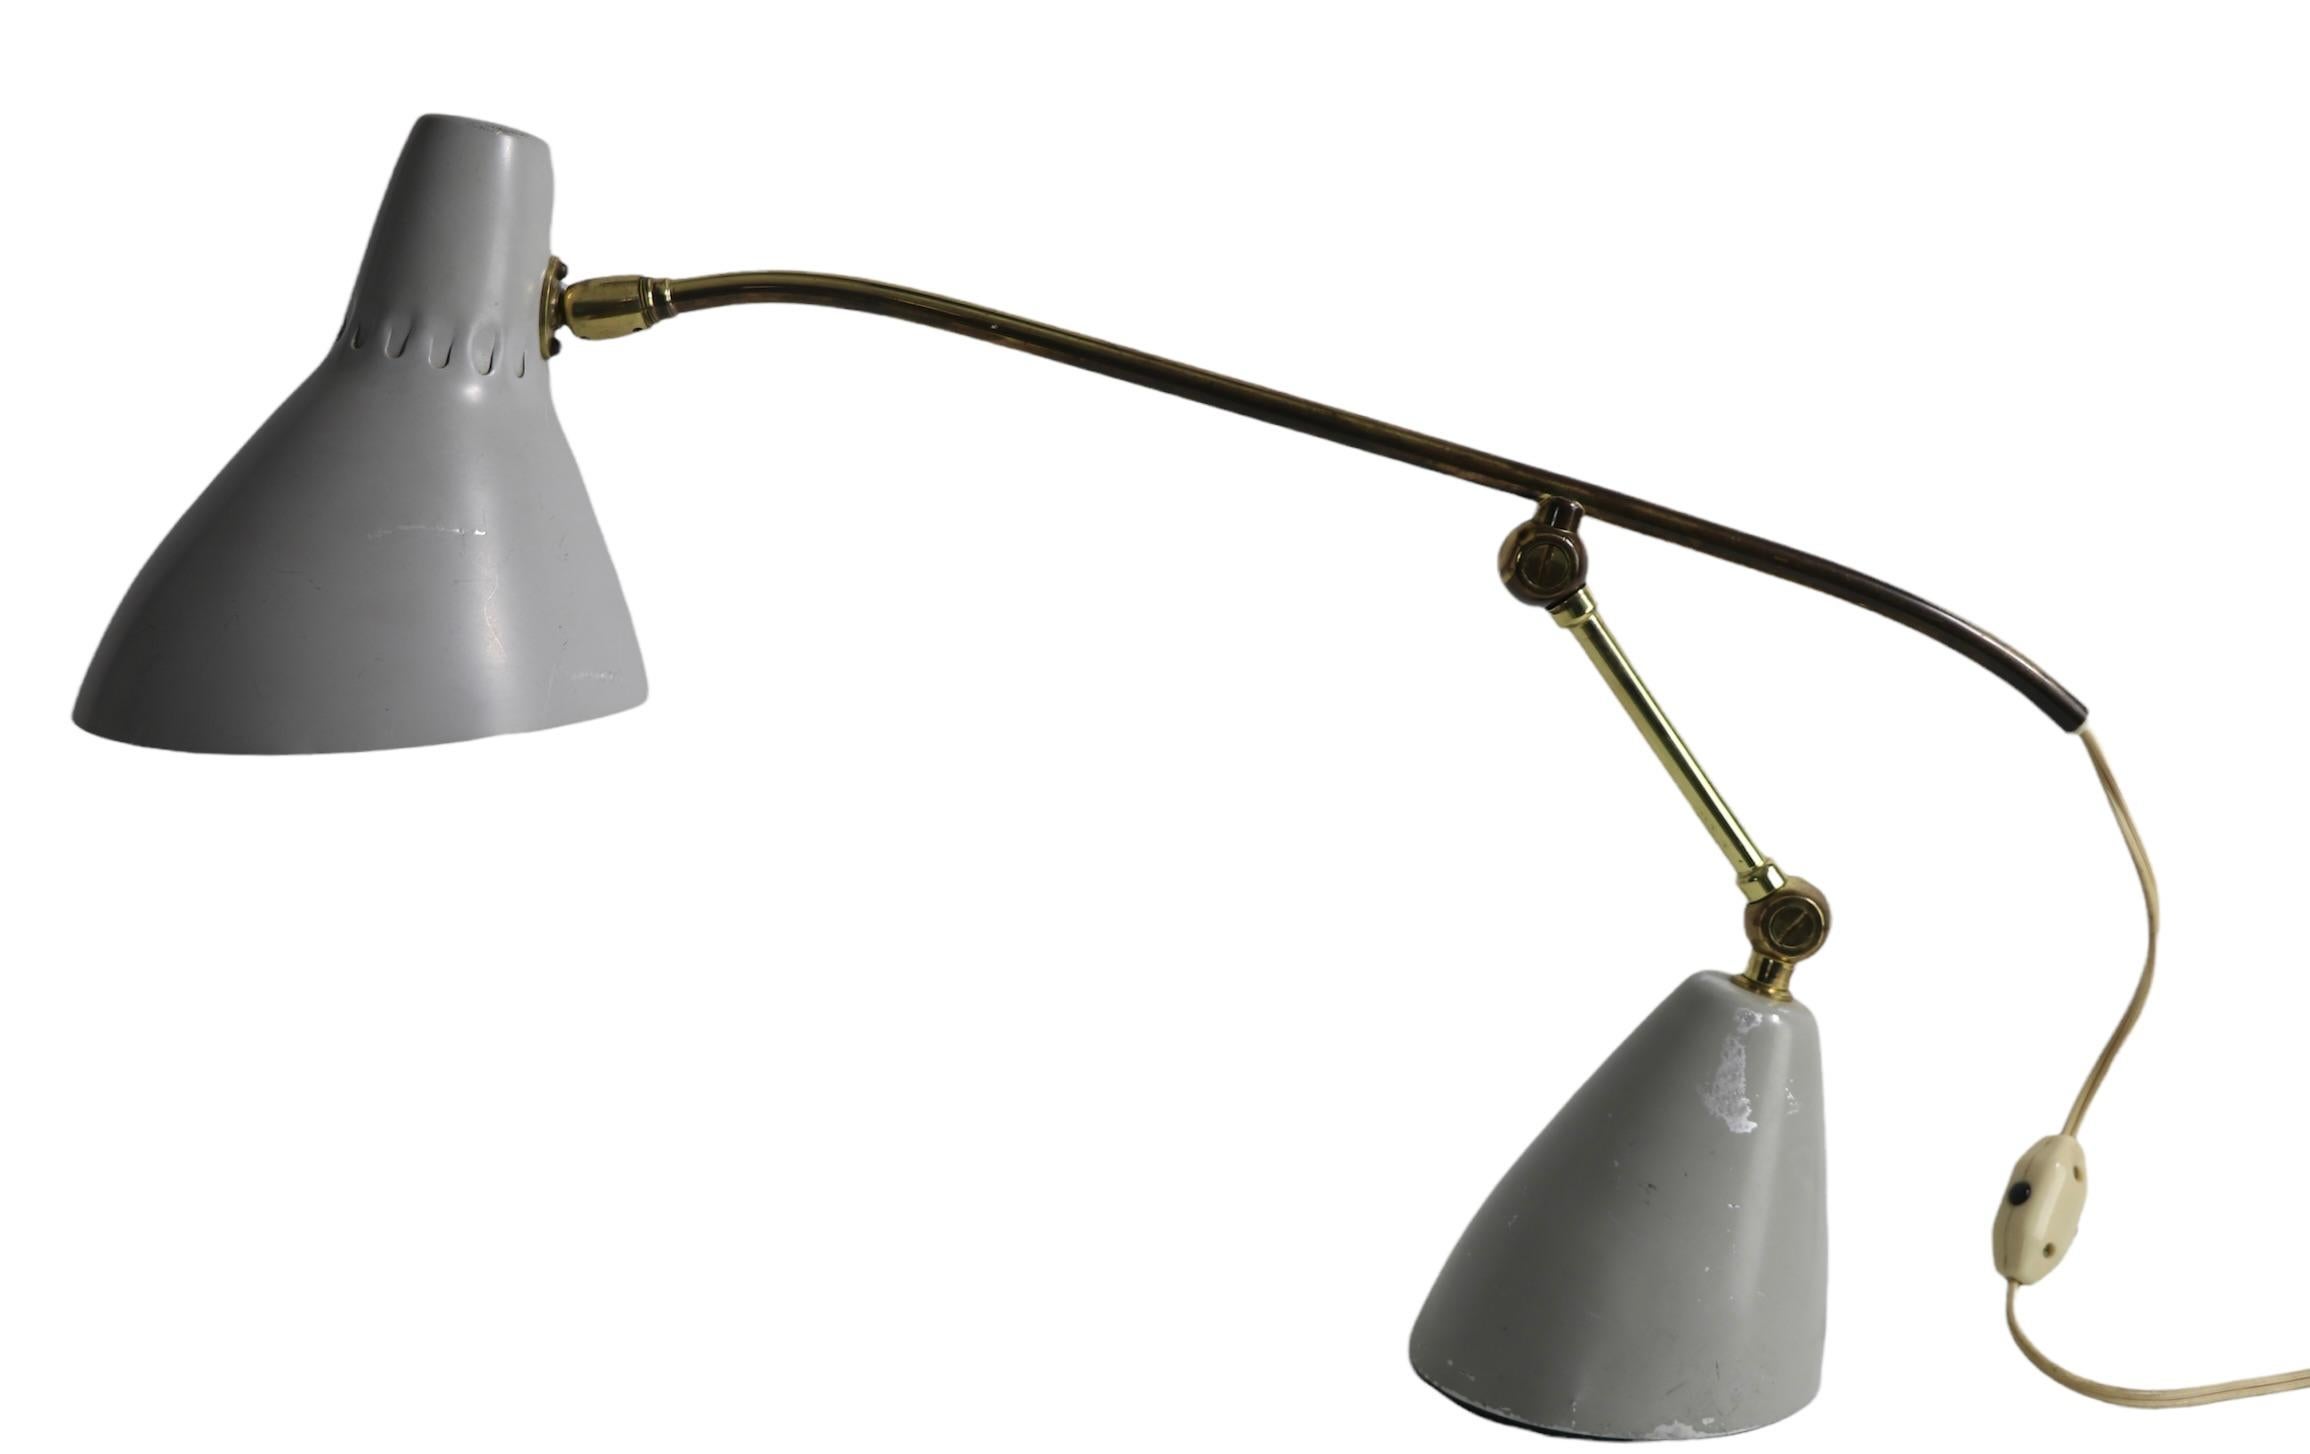 Metal Adjustable Mid Century Desk Lamp Possibly German or Italian in Origin